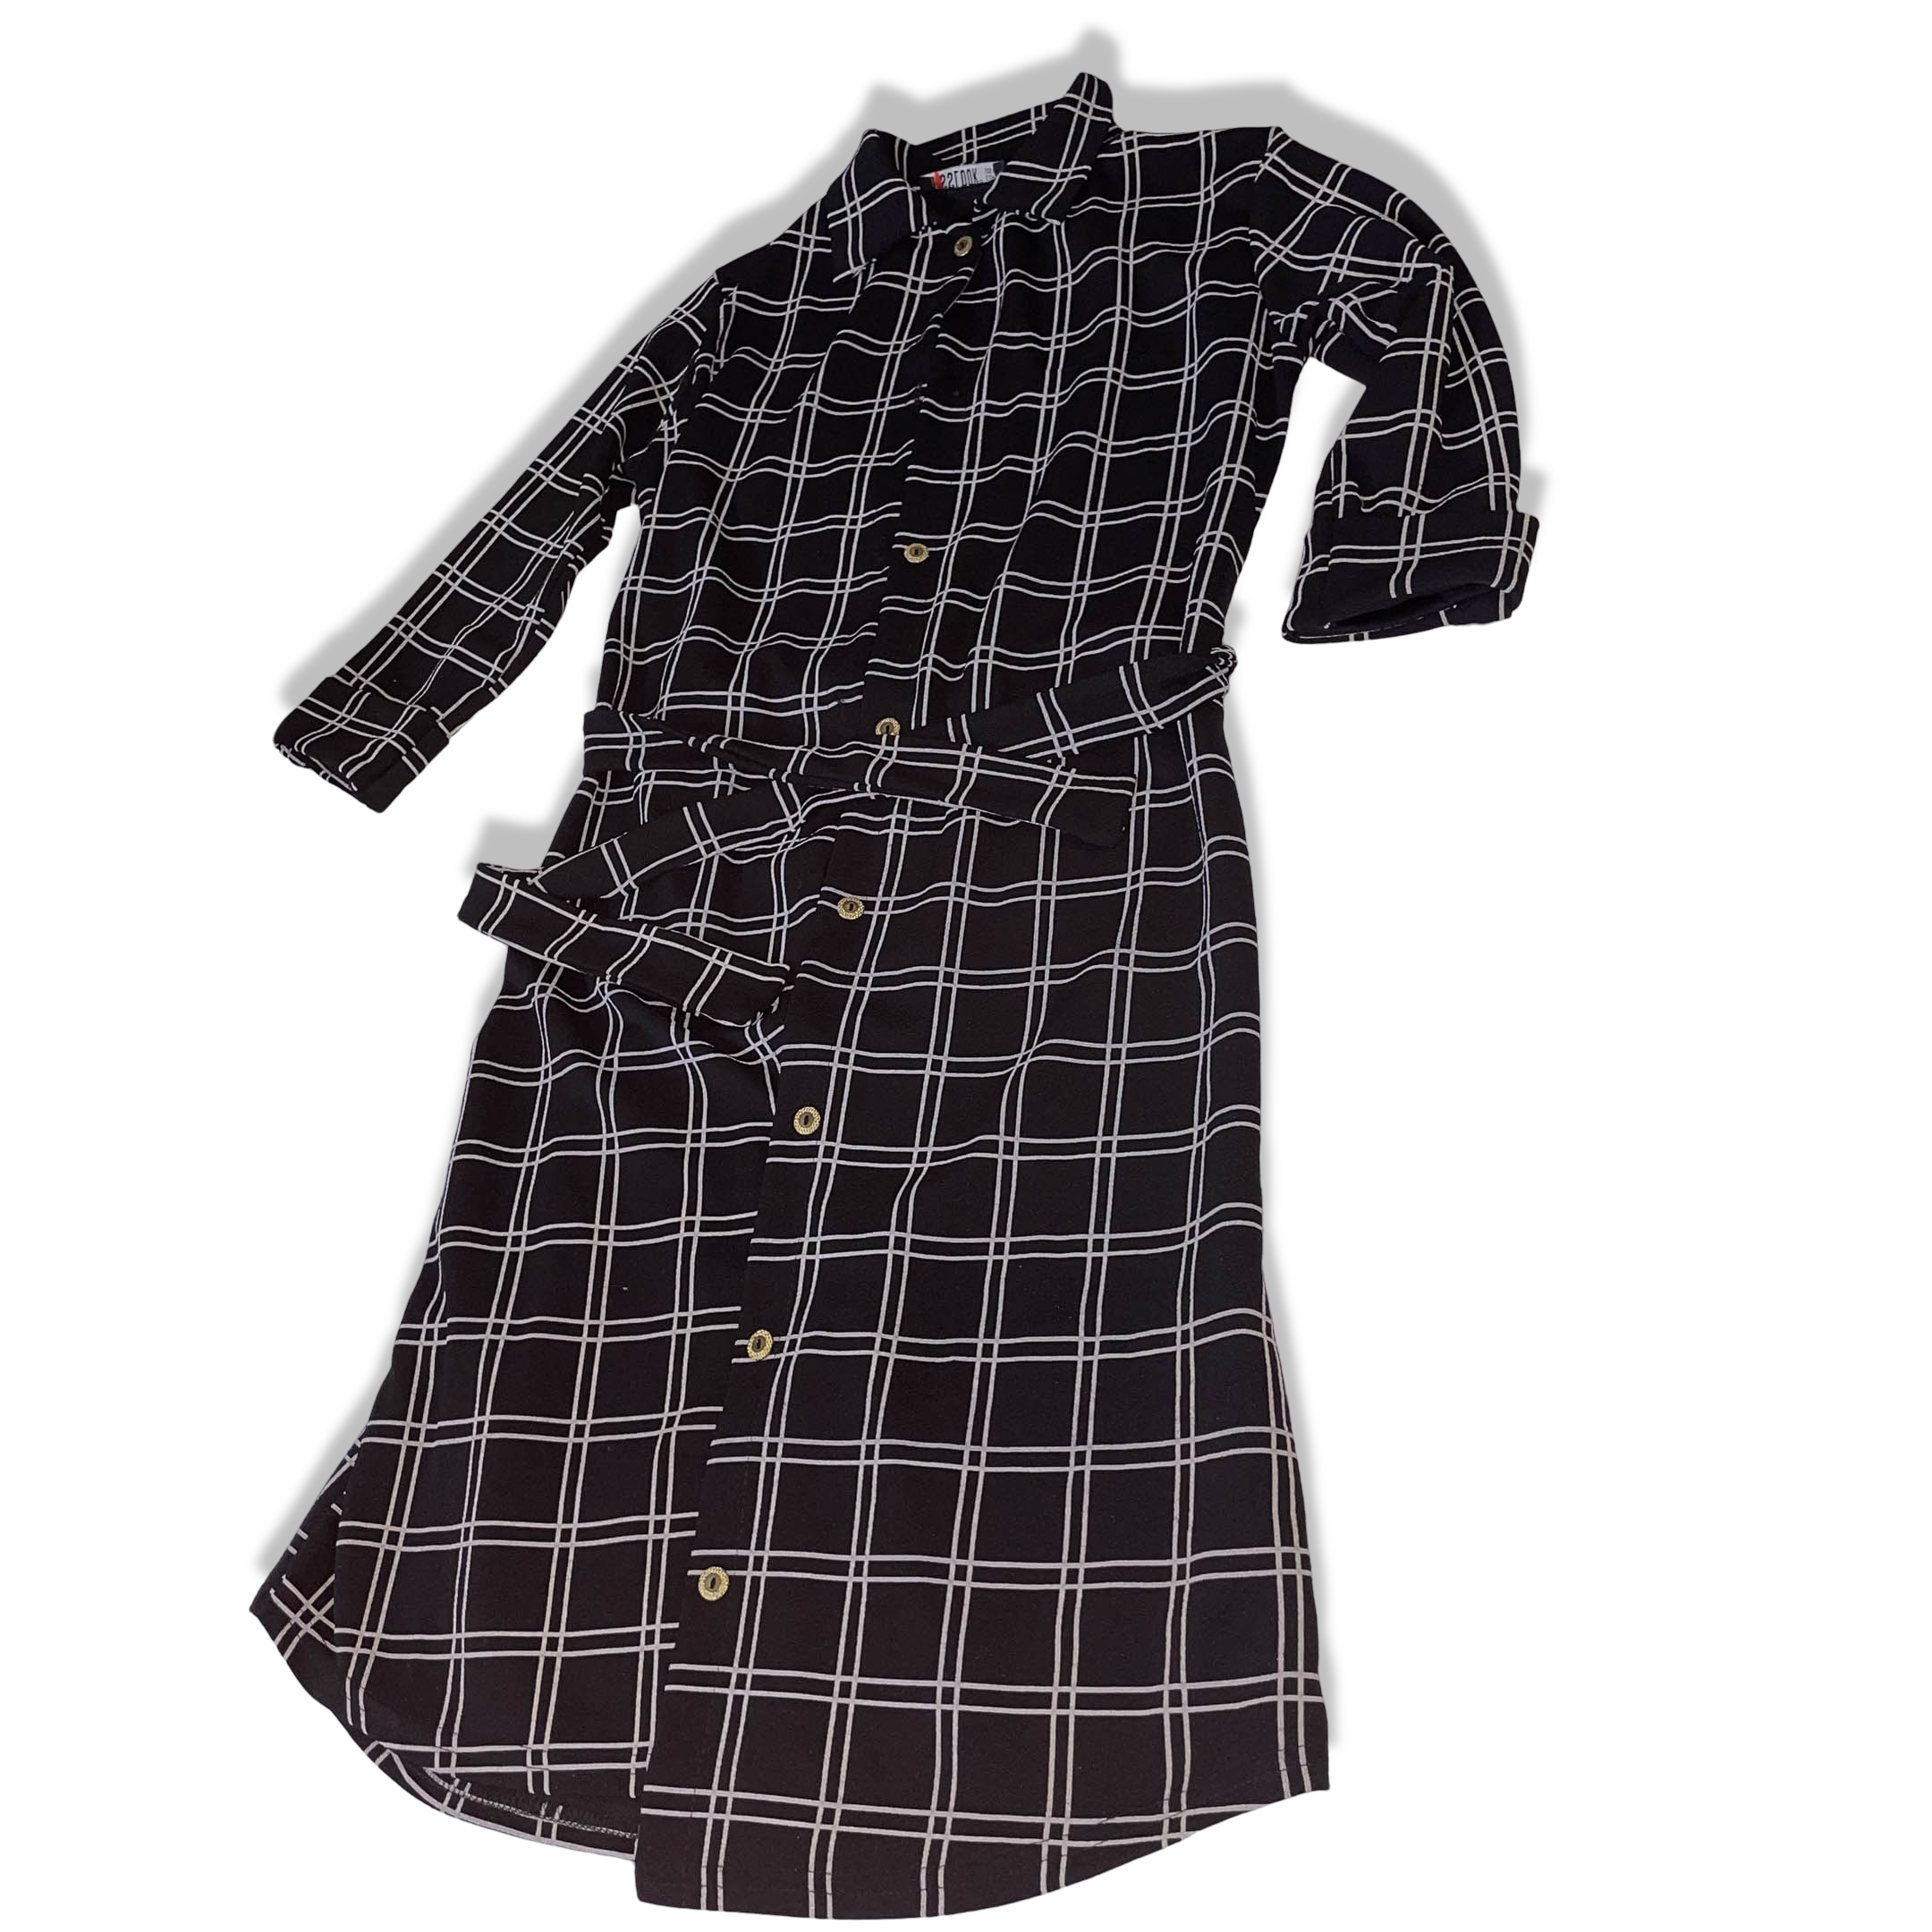 Vintage Misslook women's plaid print button up shirt dress UK 10|L40W18|SKU 3769